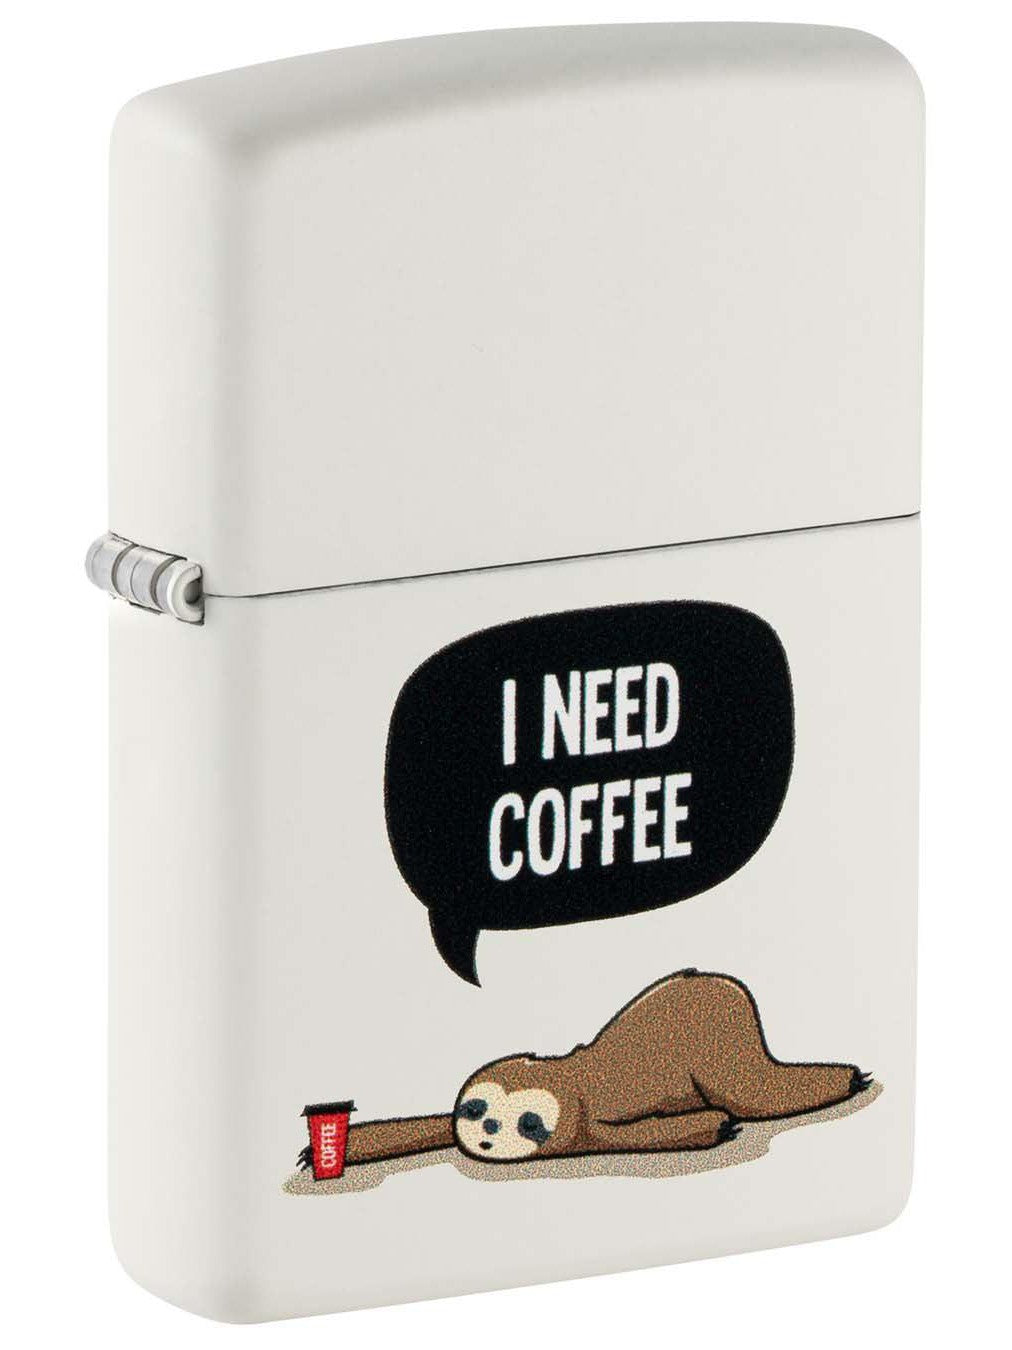 Zippo Lighter: I Need Coffee, Sloth - White Matte 48649